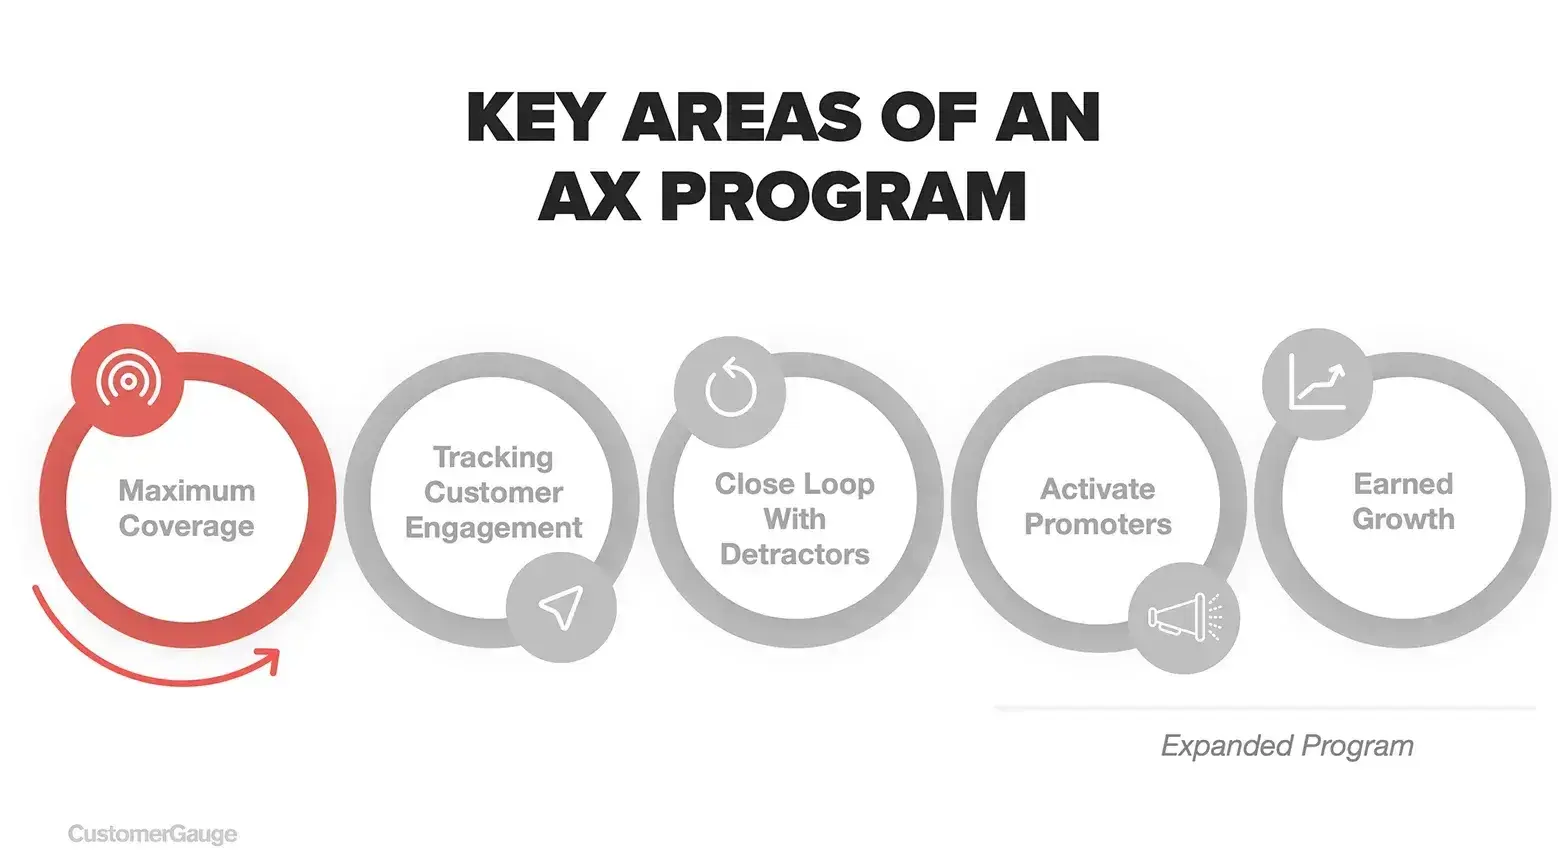 Key Areas of an AX Program